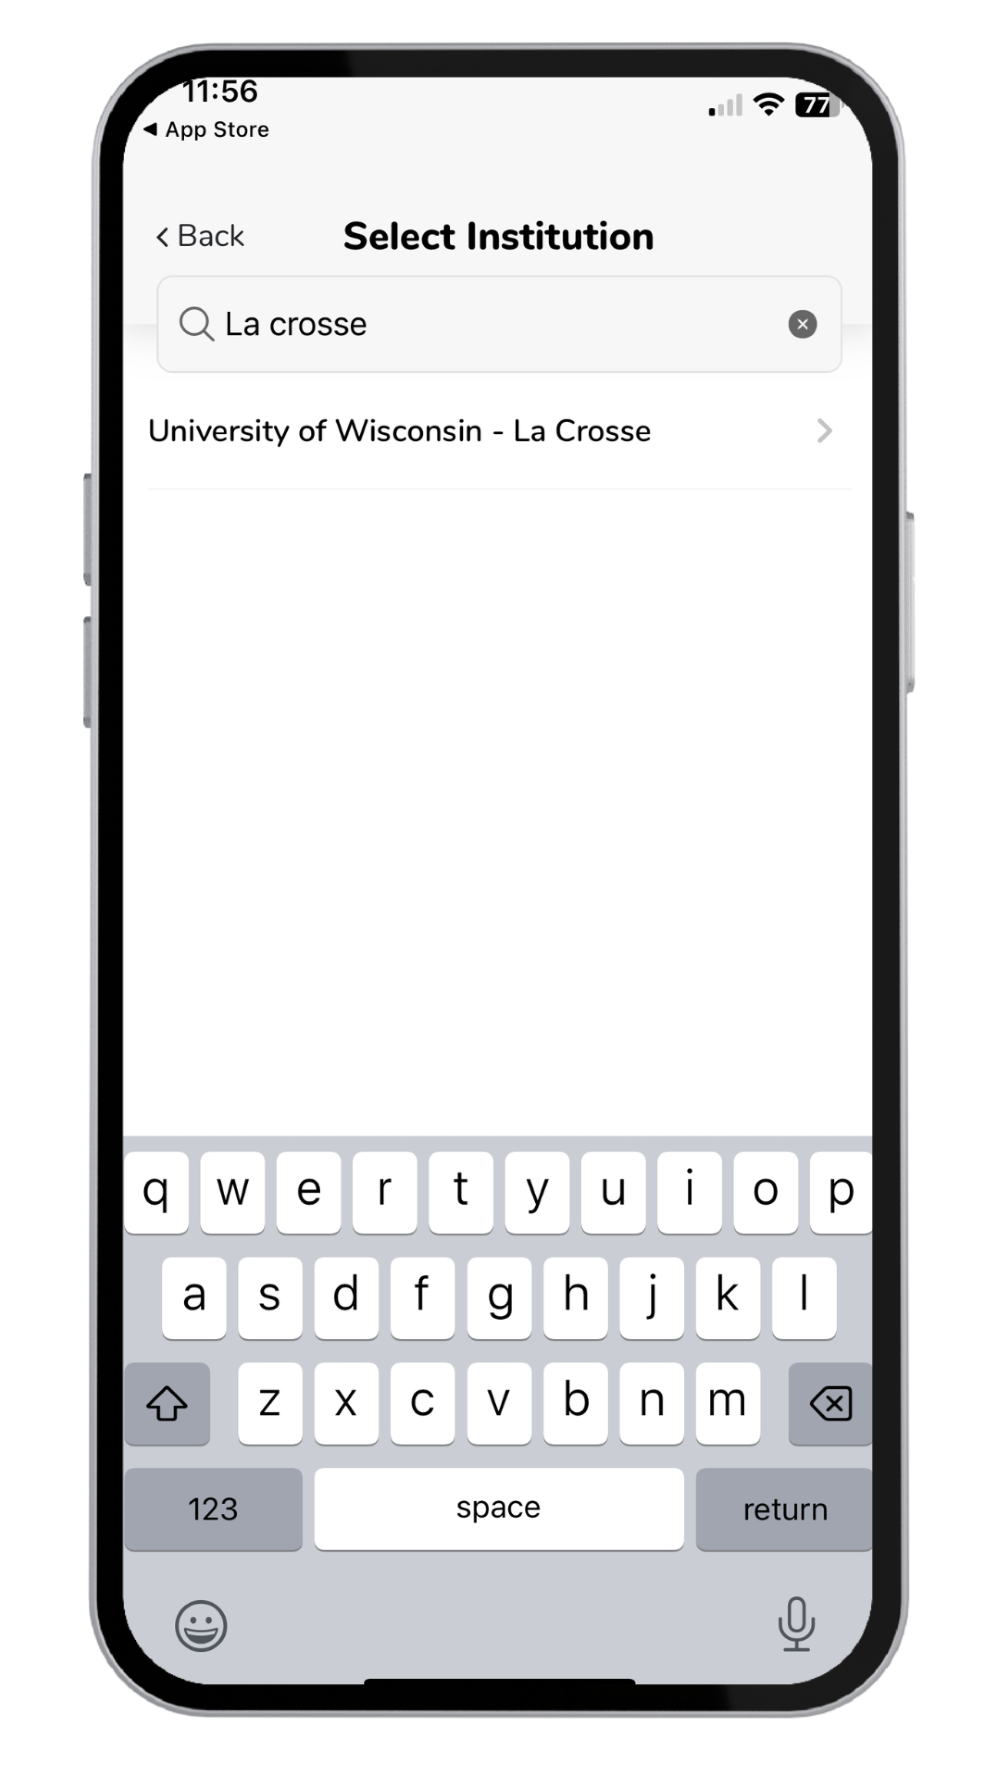 Select University of Wisconsin - La Crosse